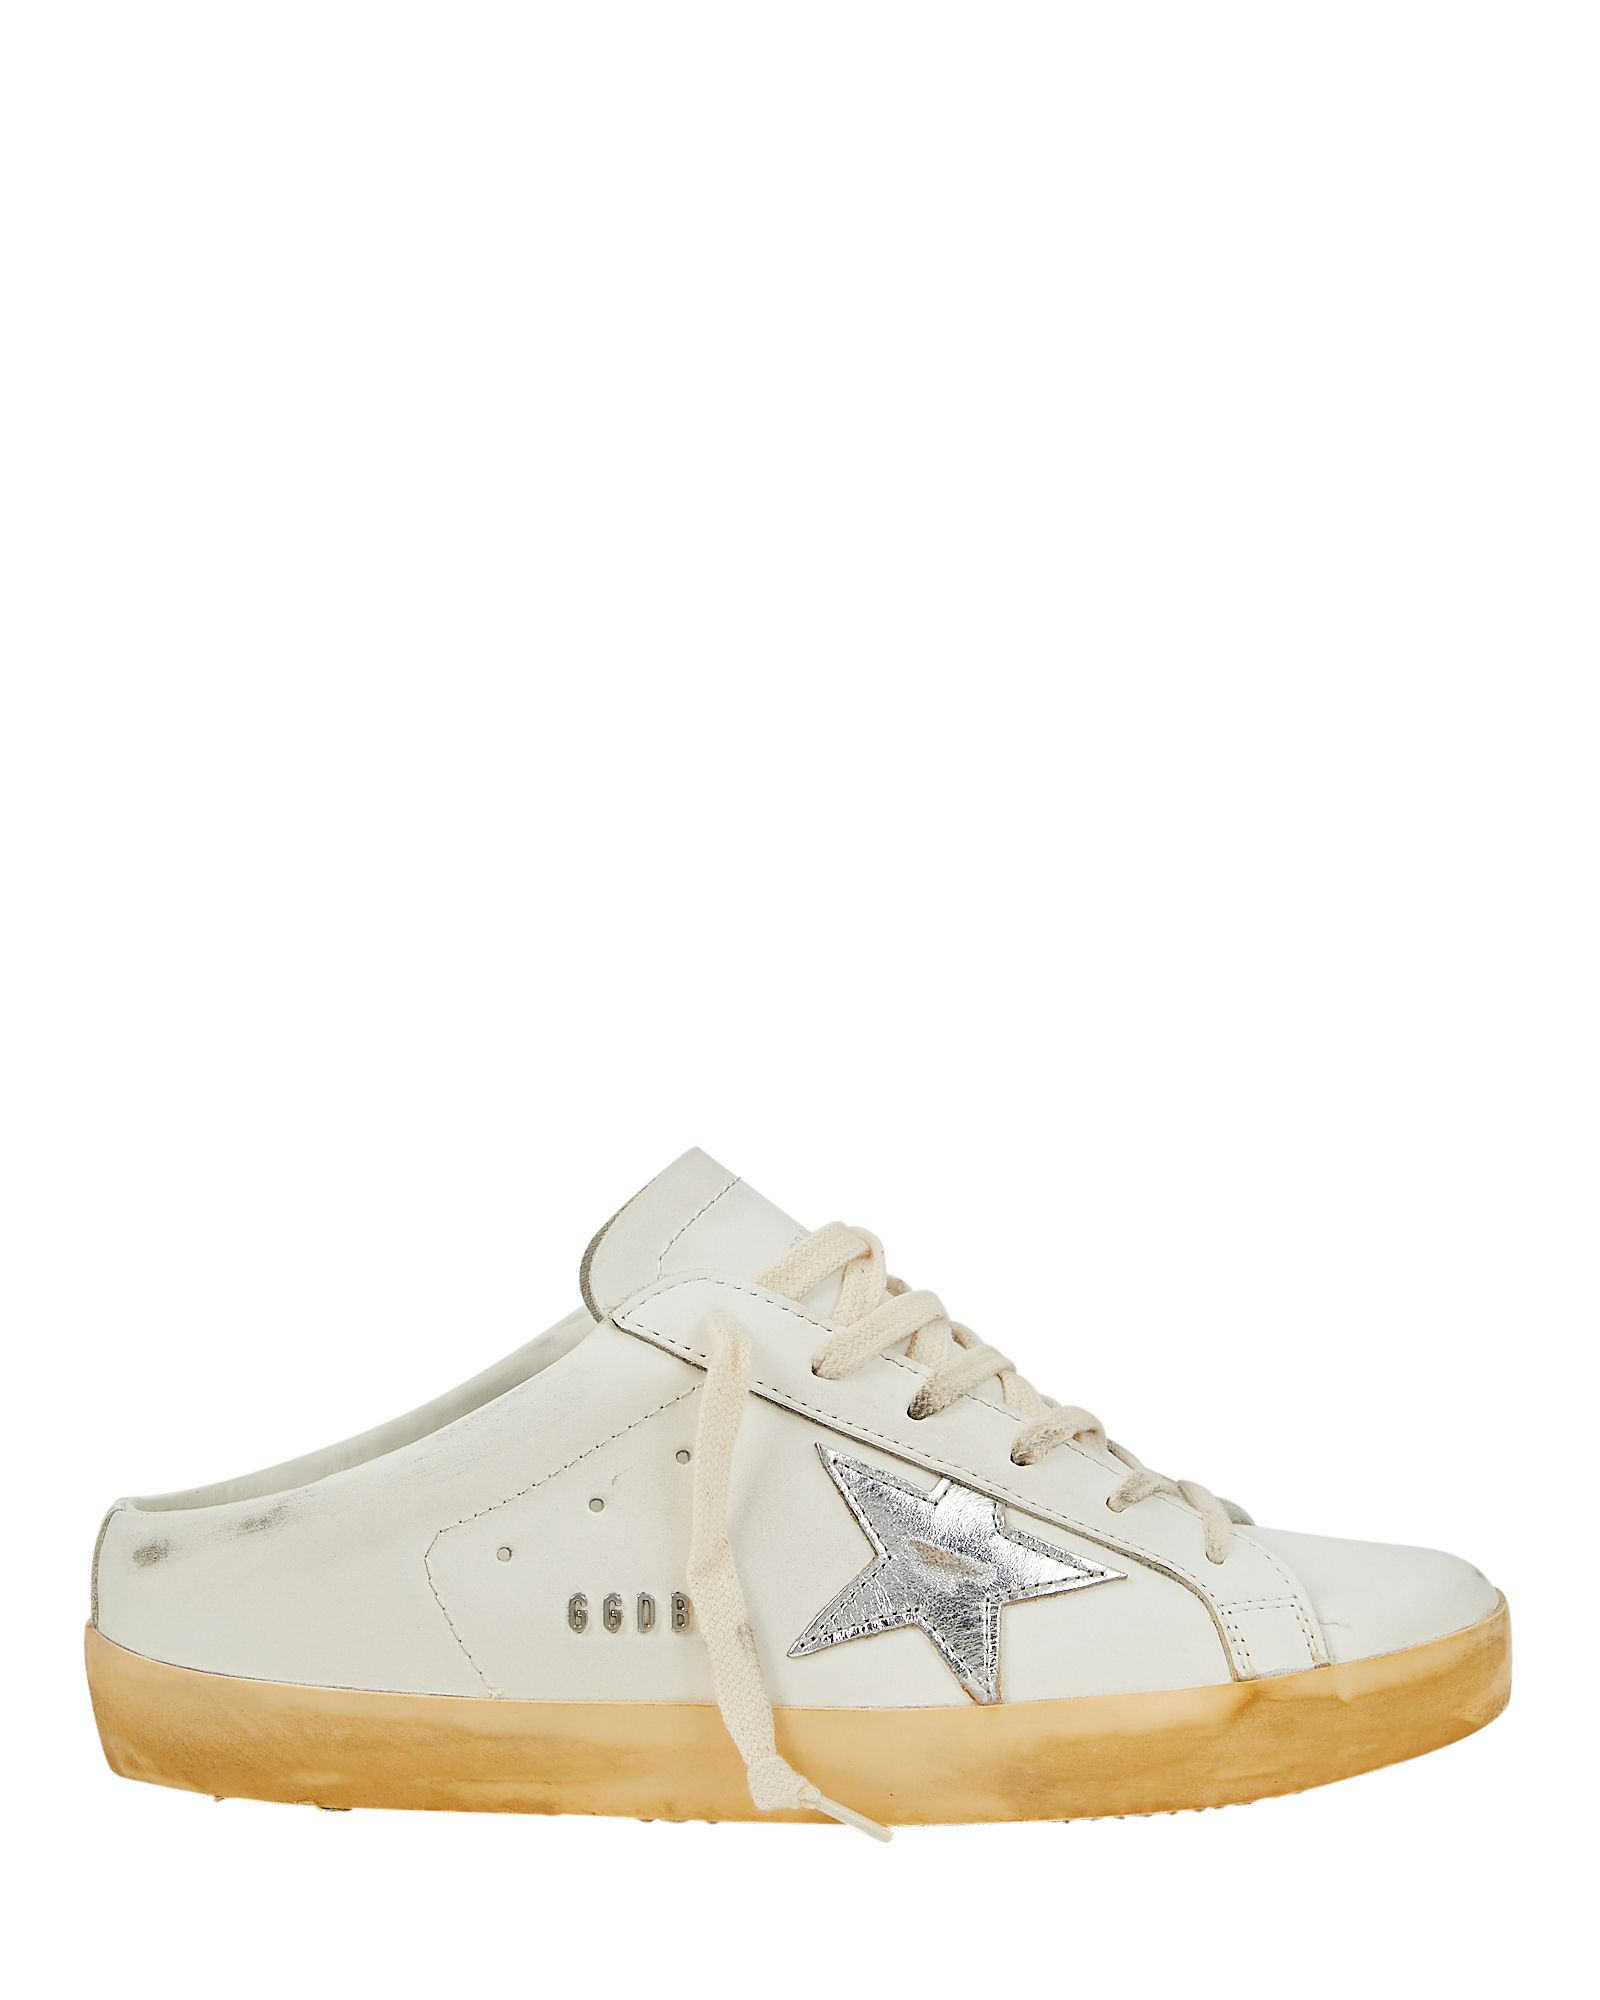 Golden Goose Superstar Sabot Slip-On Sneakers, White 39 | INTERMIX